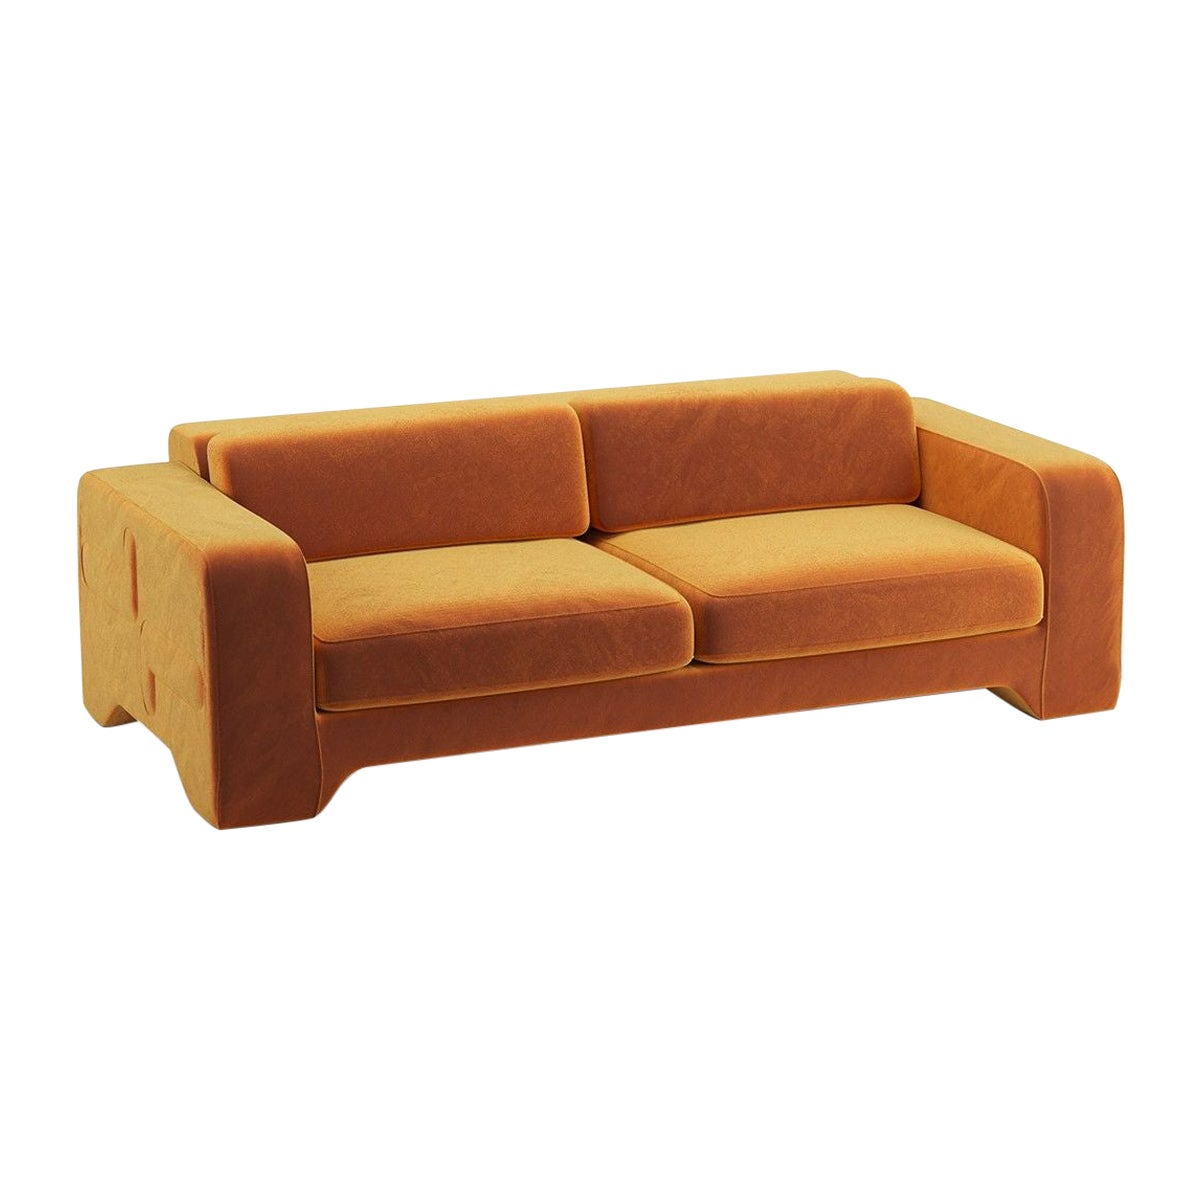 Popus Editions Giovanna 4 Seater Sofa in Cognac Como Velvet Upholstery